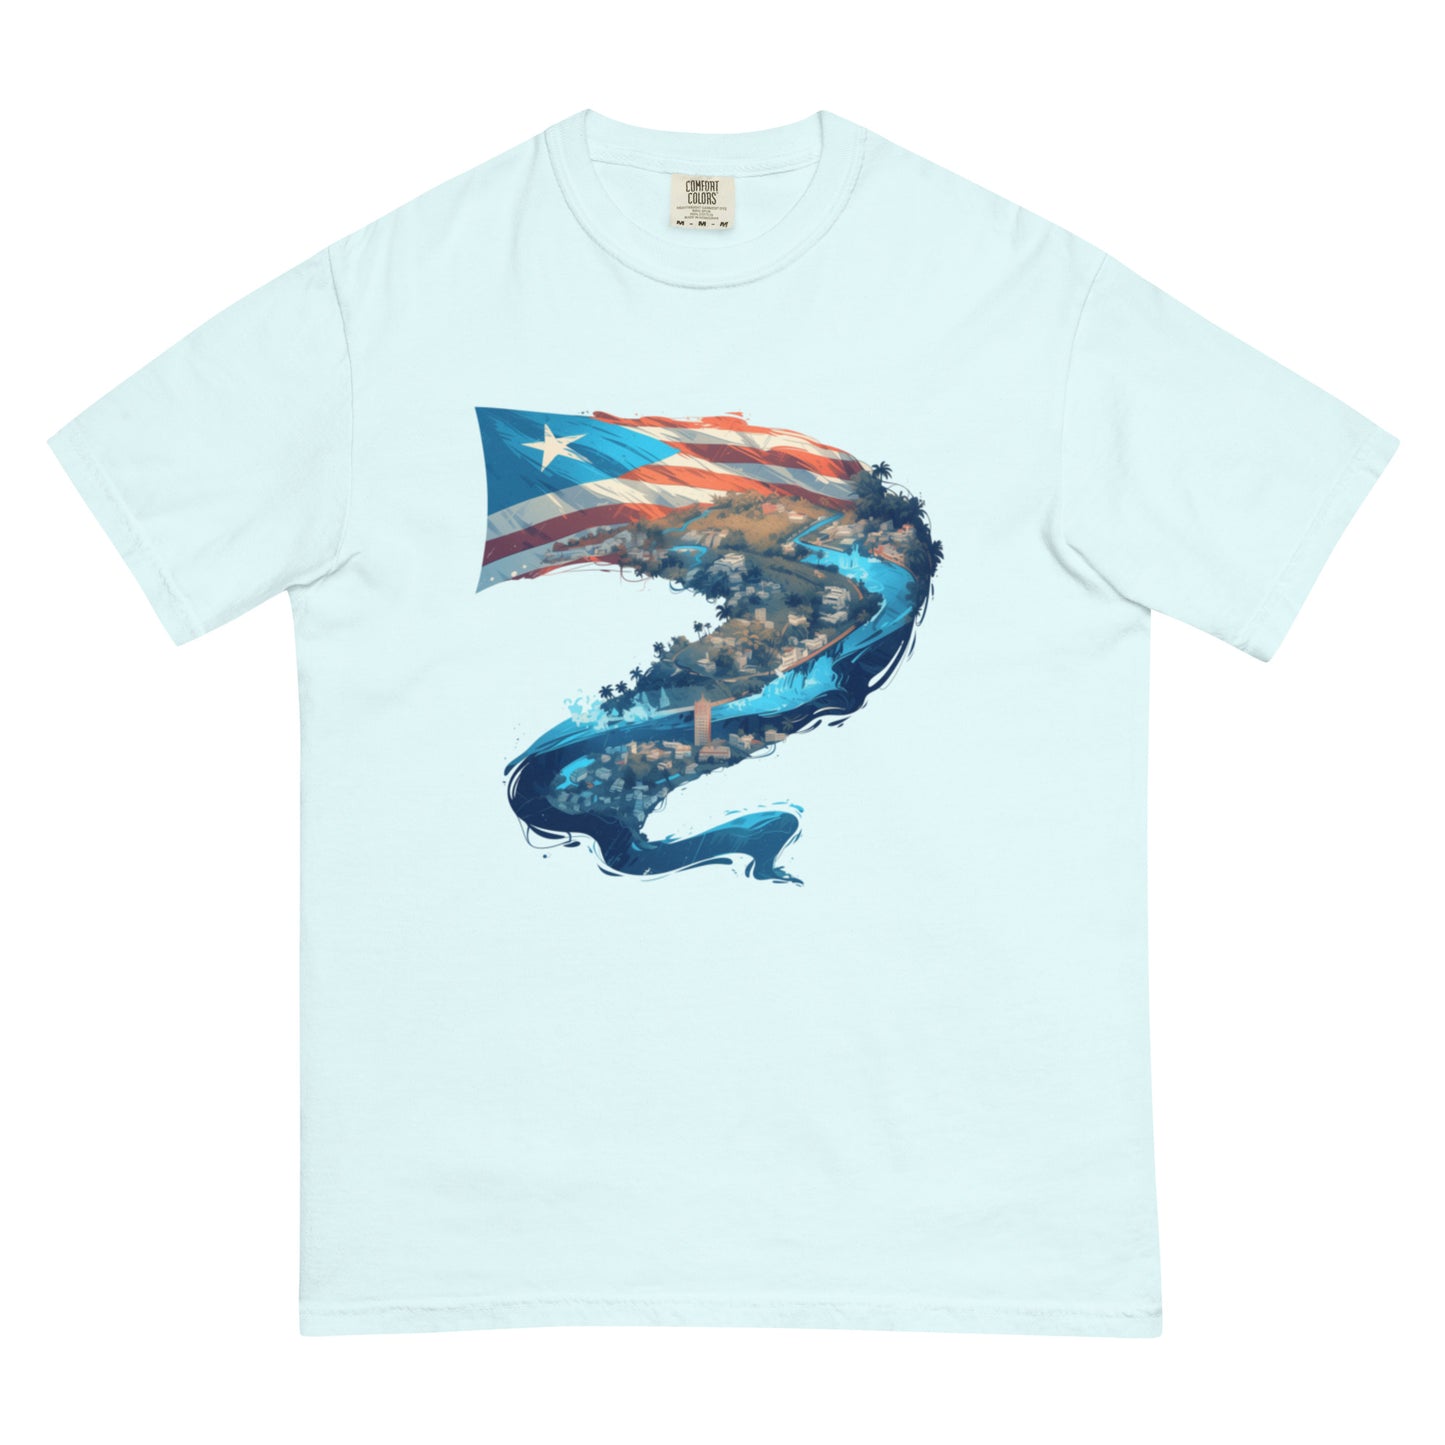 Puerto Rico River || Unisex garment-dyed heavyweight t-shirt